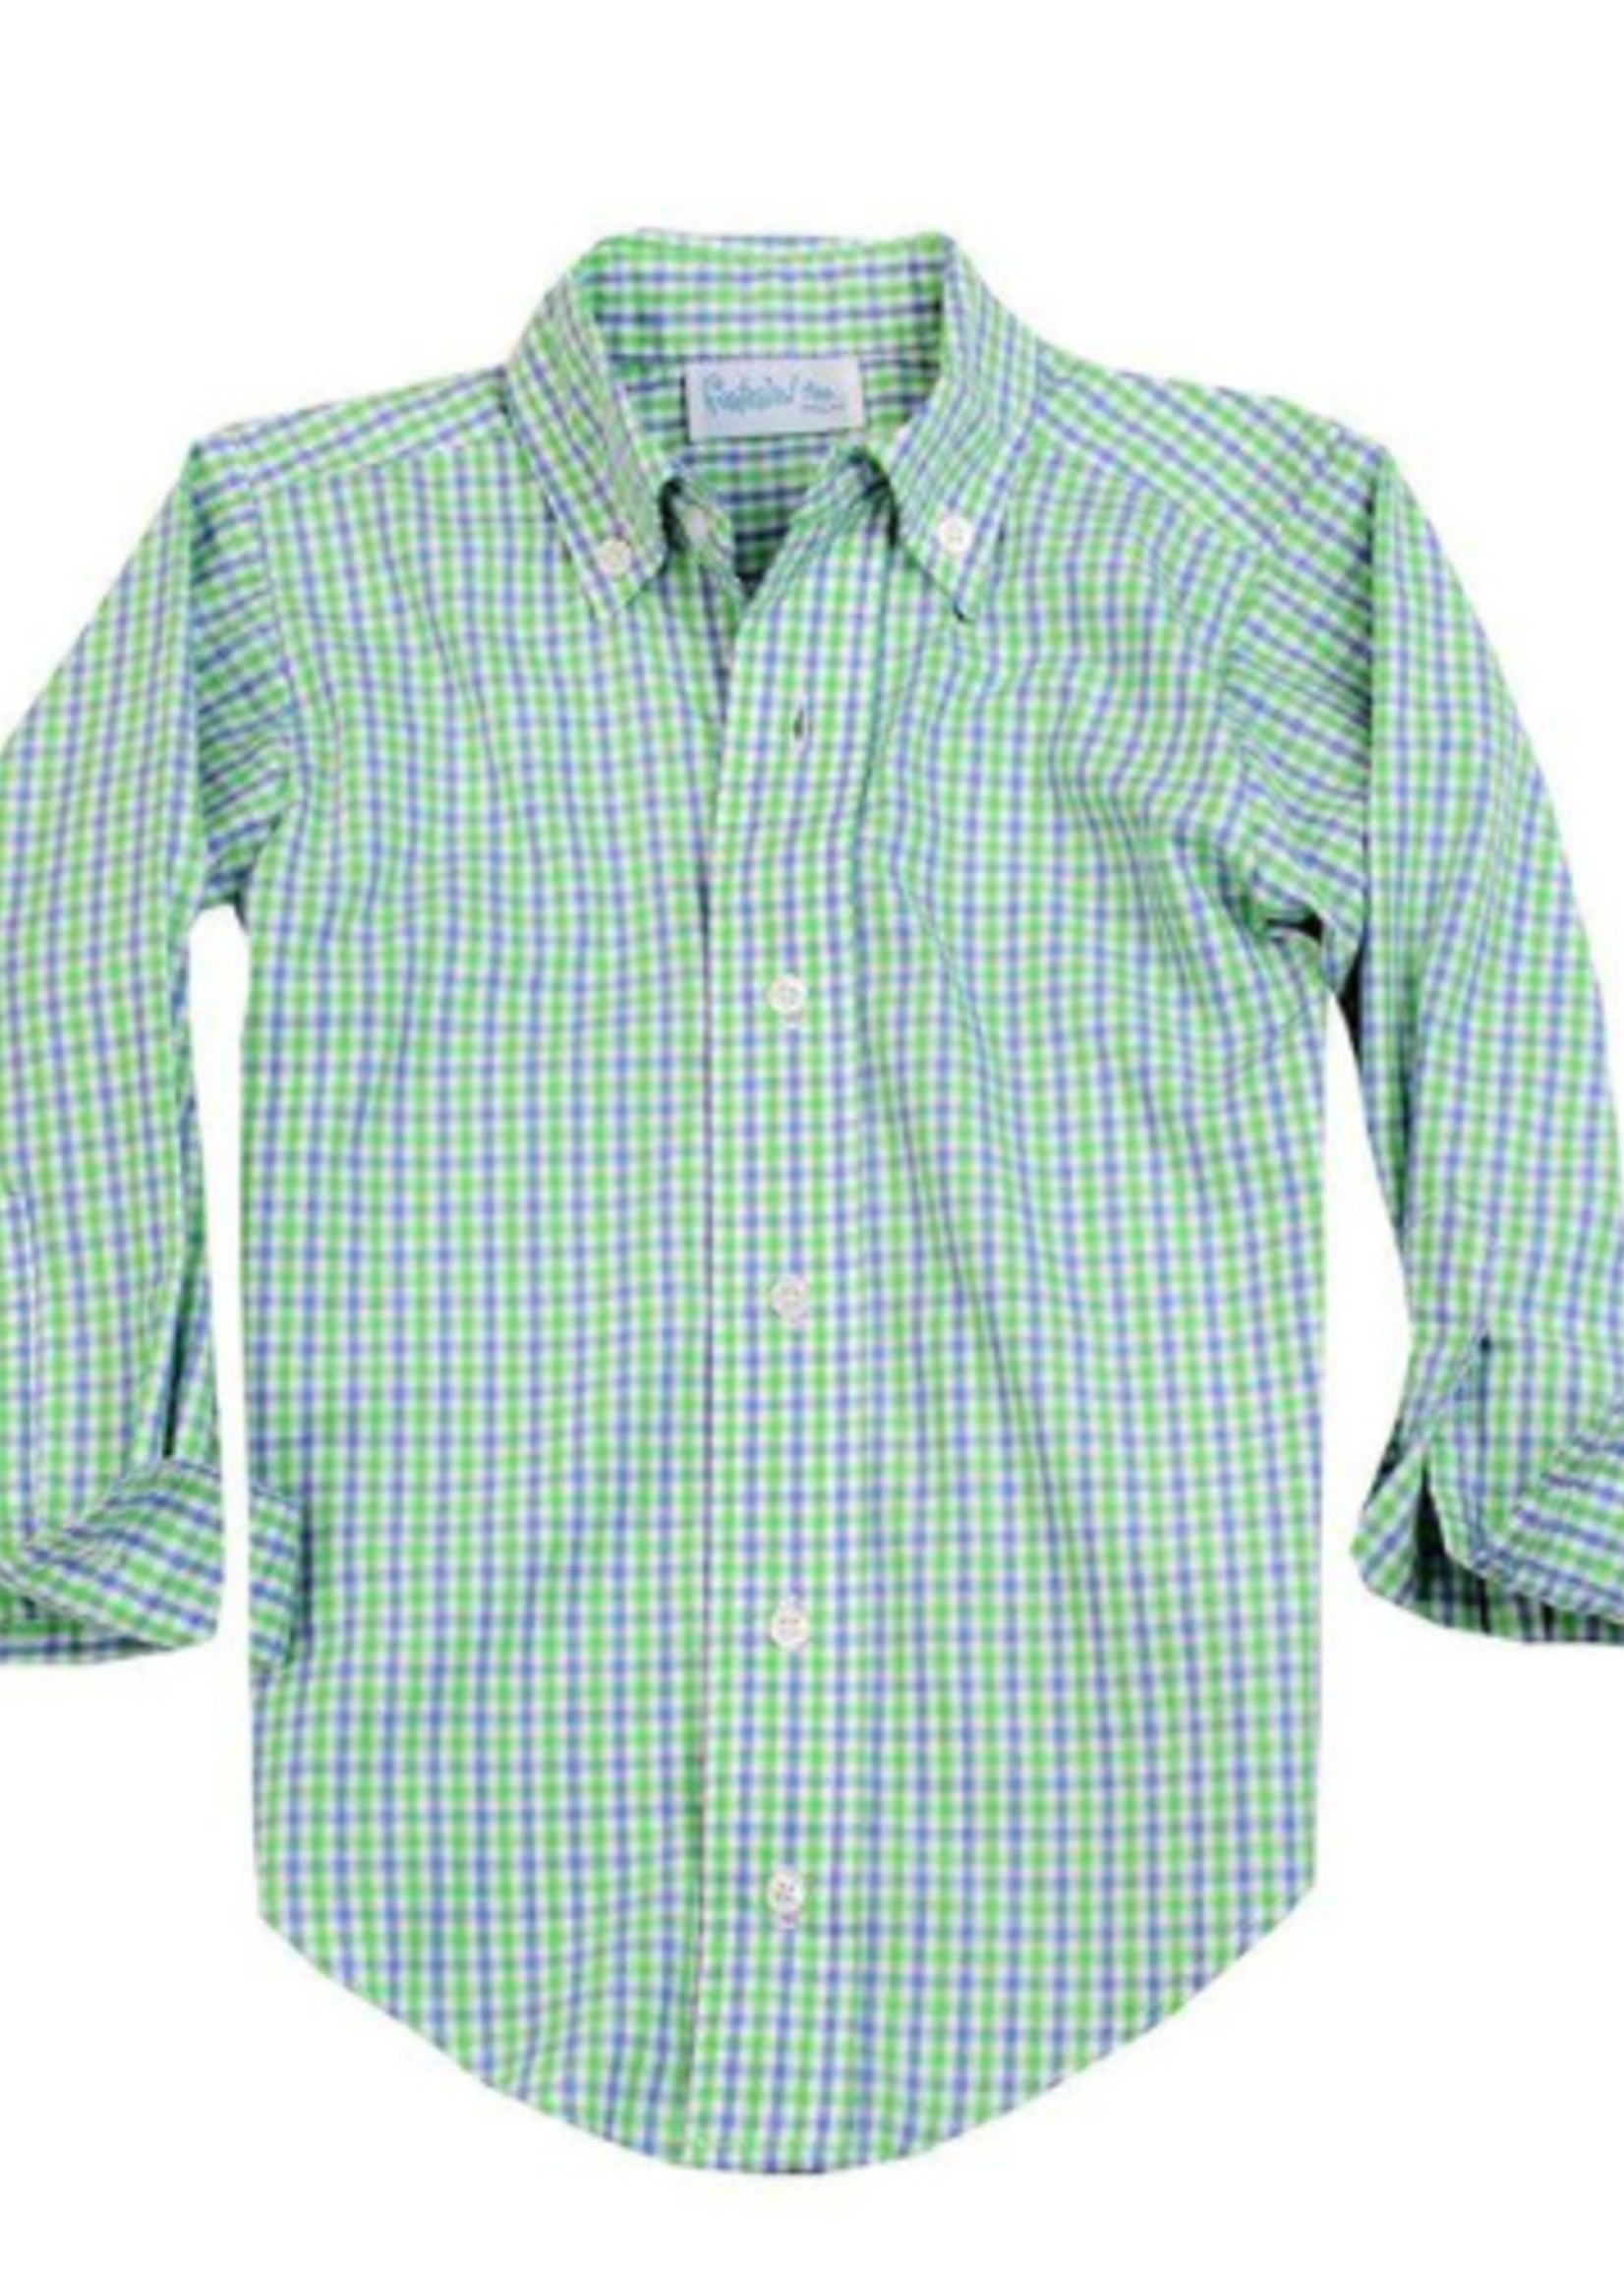 Funtasia Too Green/Blue Plaid Boys Shirt